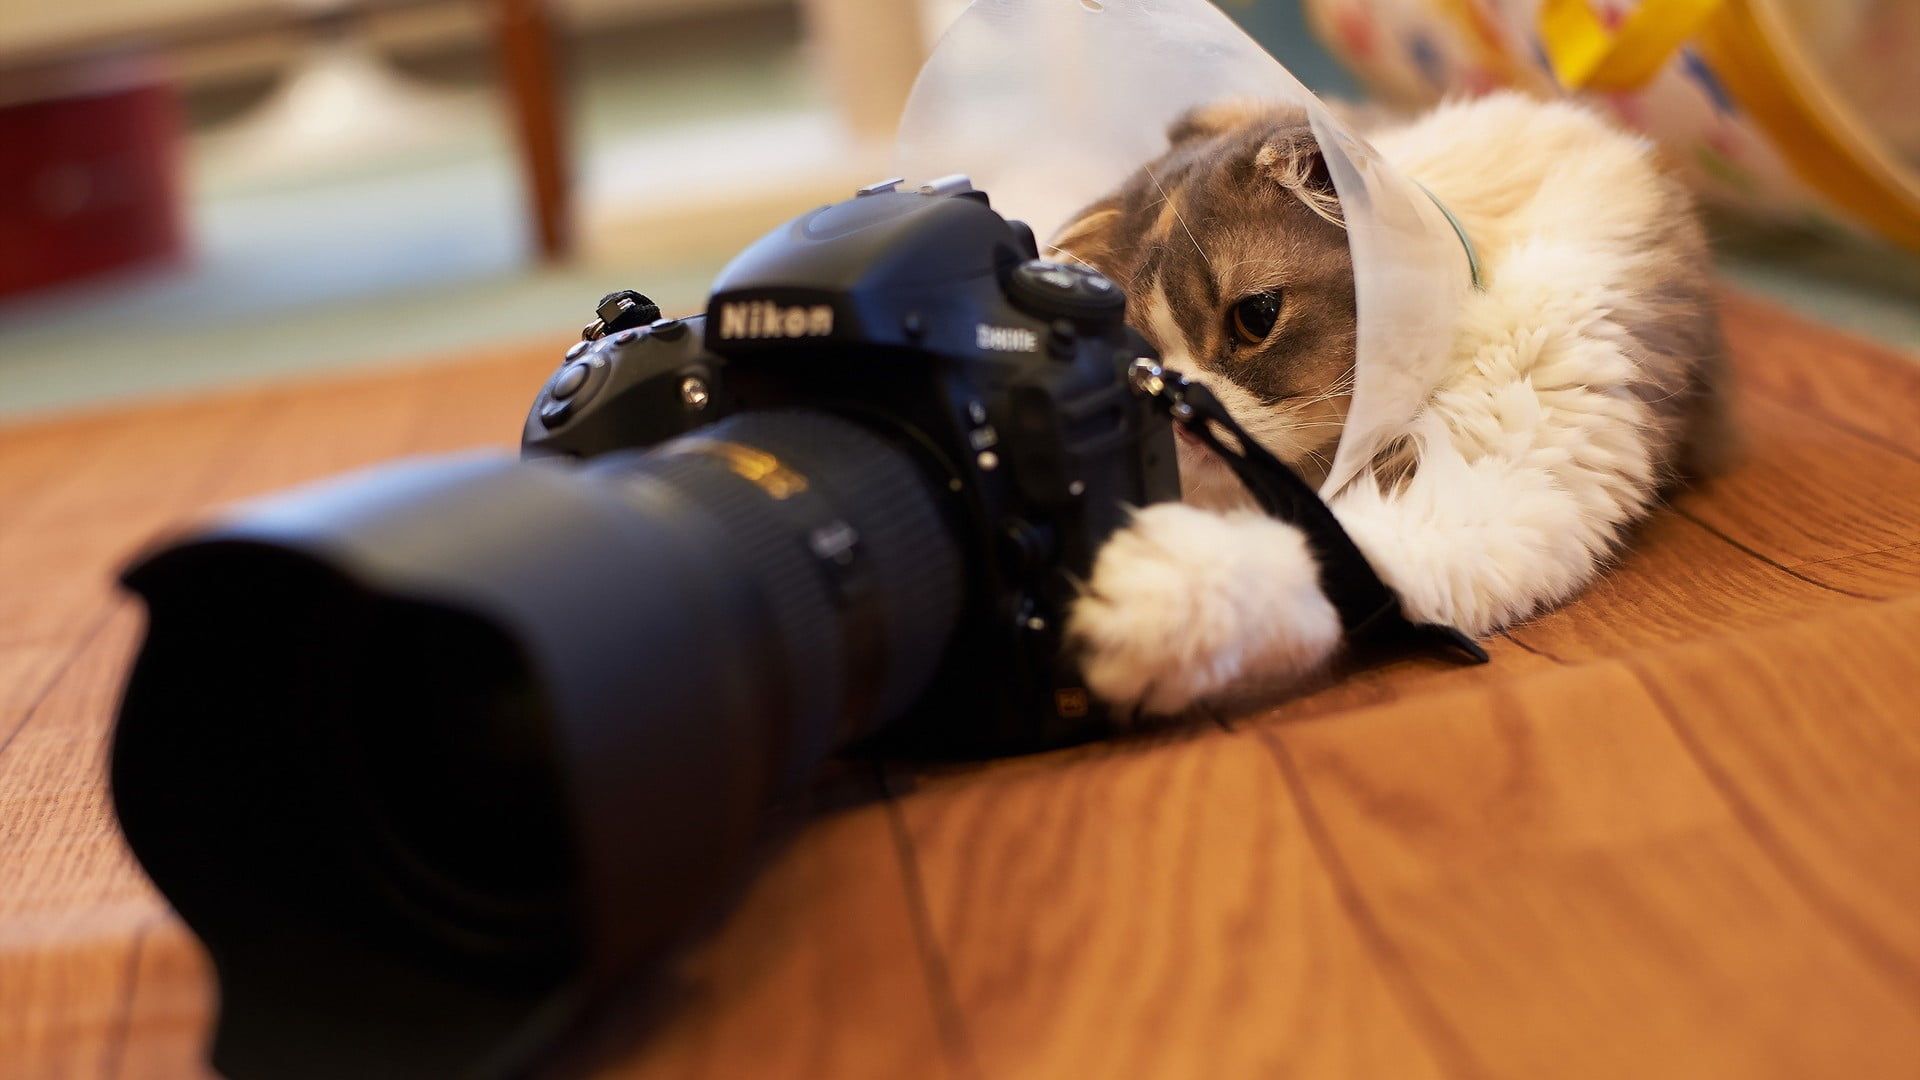 Selective focus photography of cat using Nikon DSLR camera HD